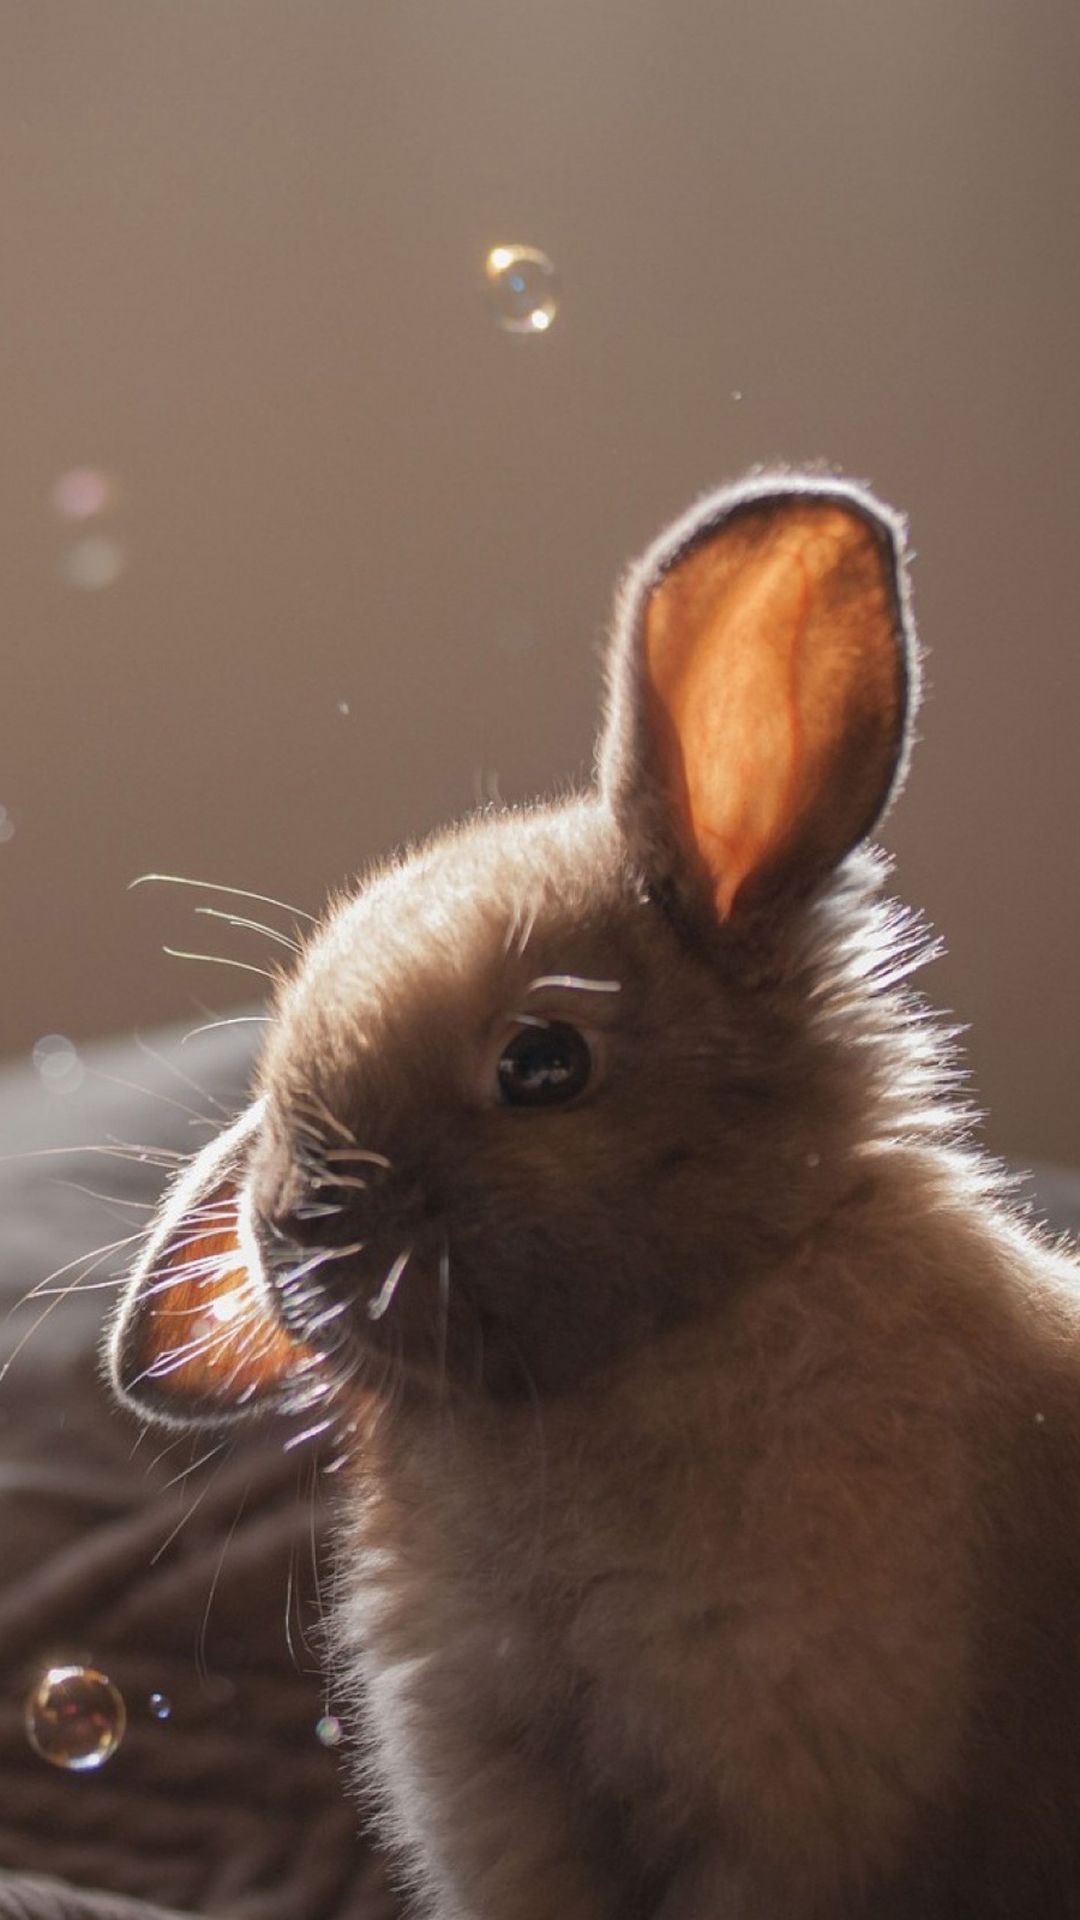 Cute Bunny Soap Bubbles iPhone 8 Wallpaper Free Download